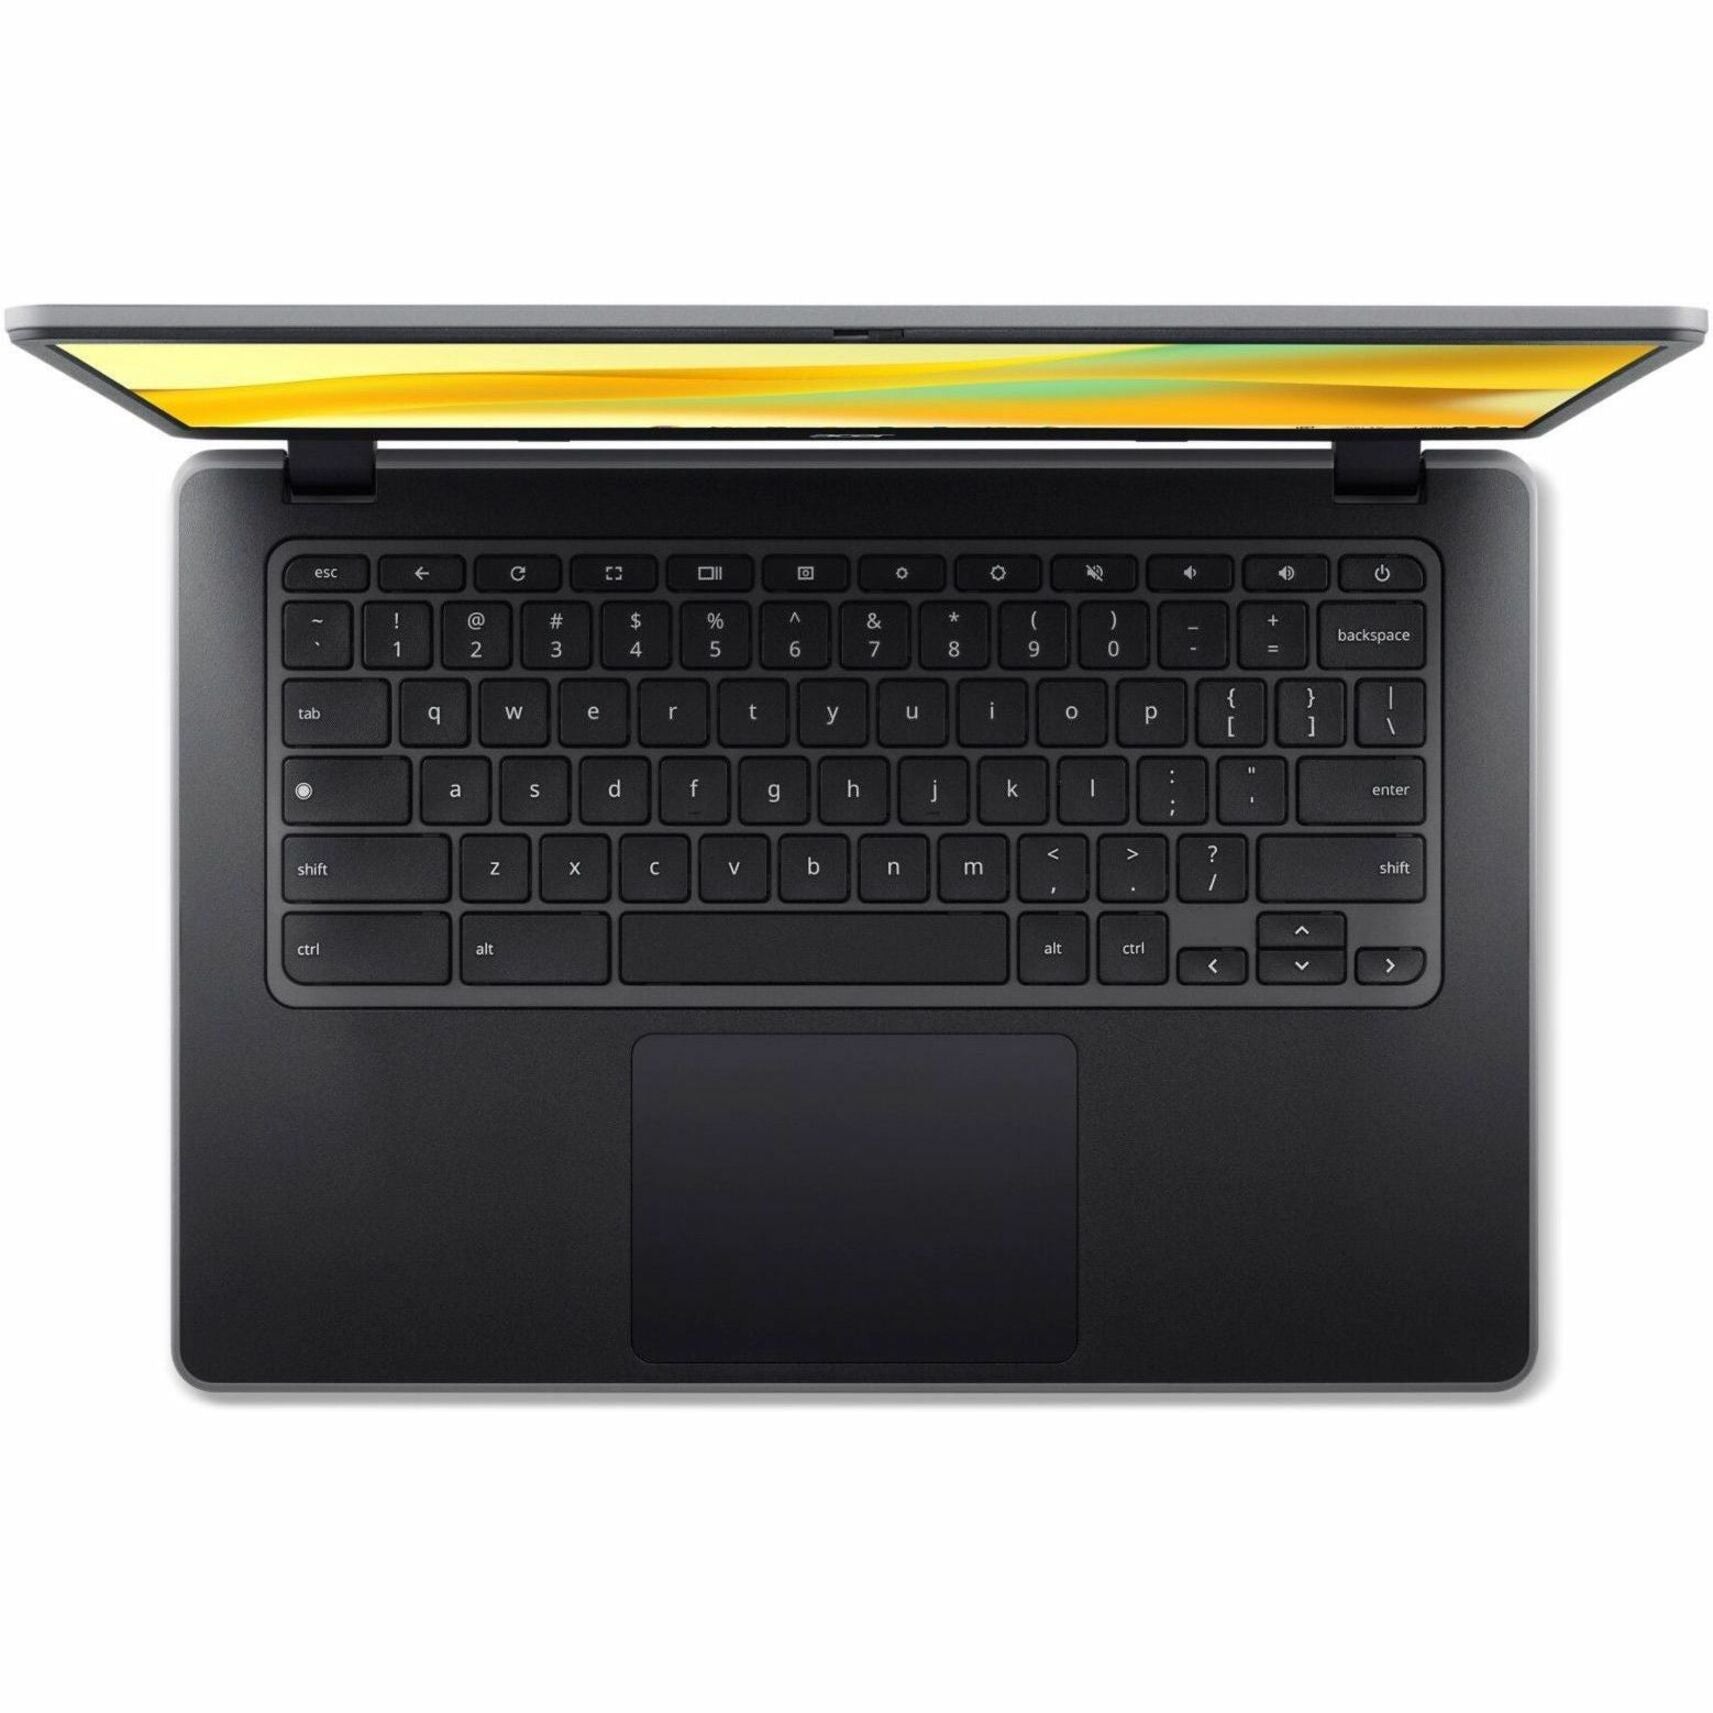 Acer NX.KNJAA.002 Chromebook 314 C936-C1DM 14" Laptop, 8GB RAM, 64GB SSD, ChromeOS